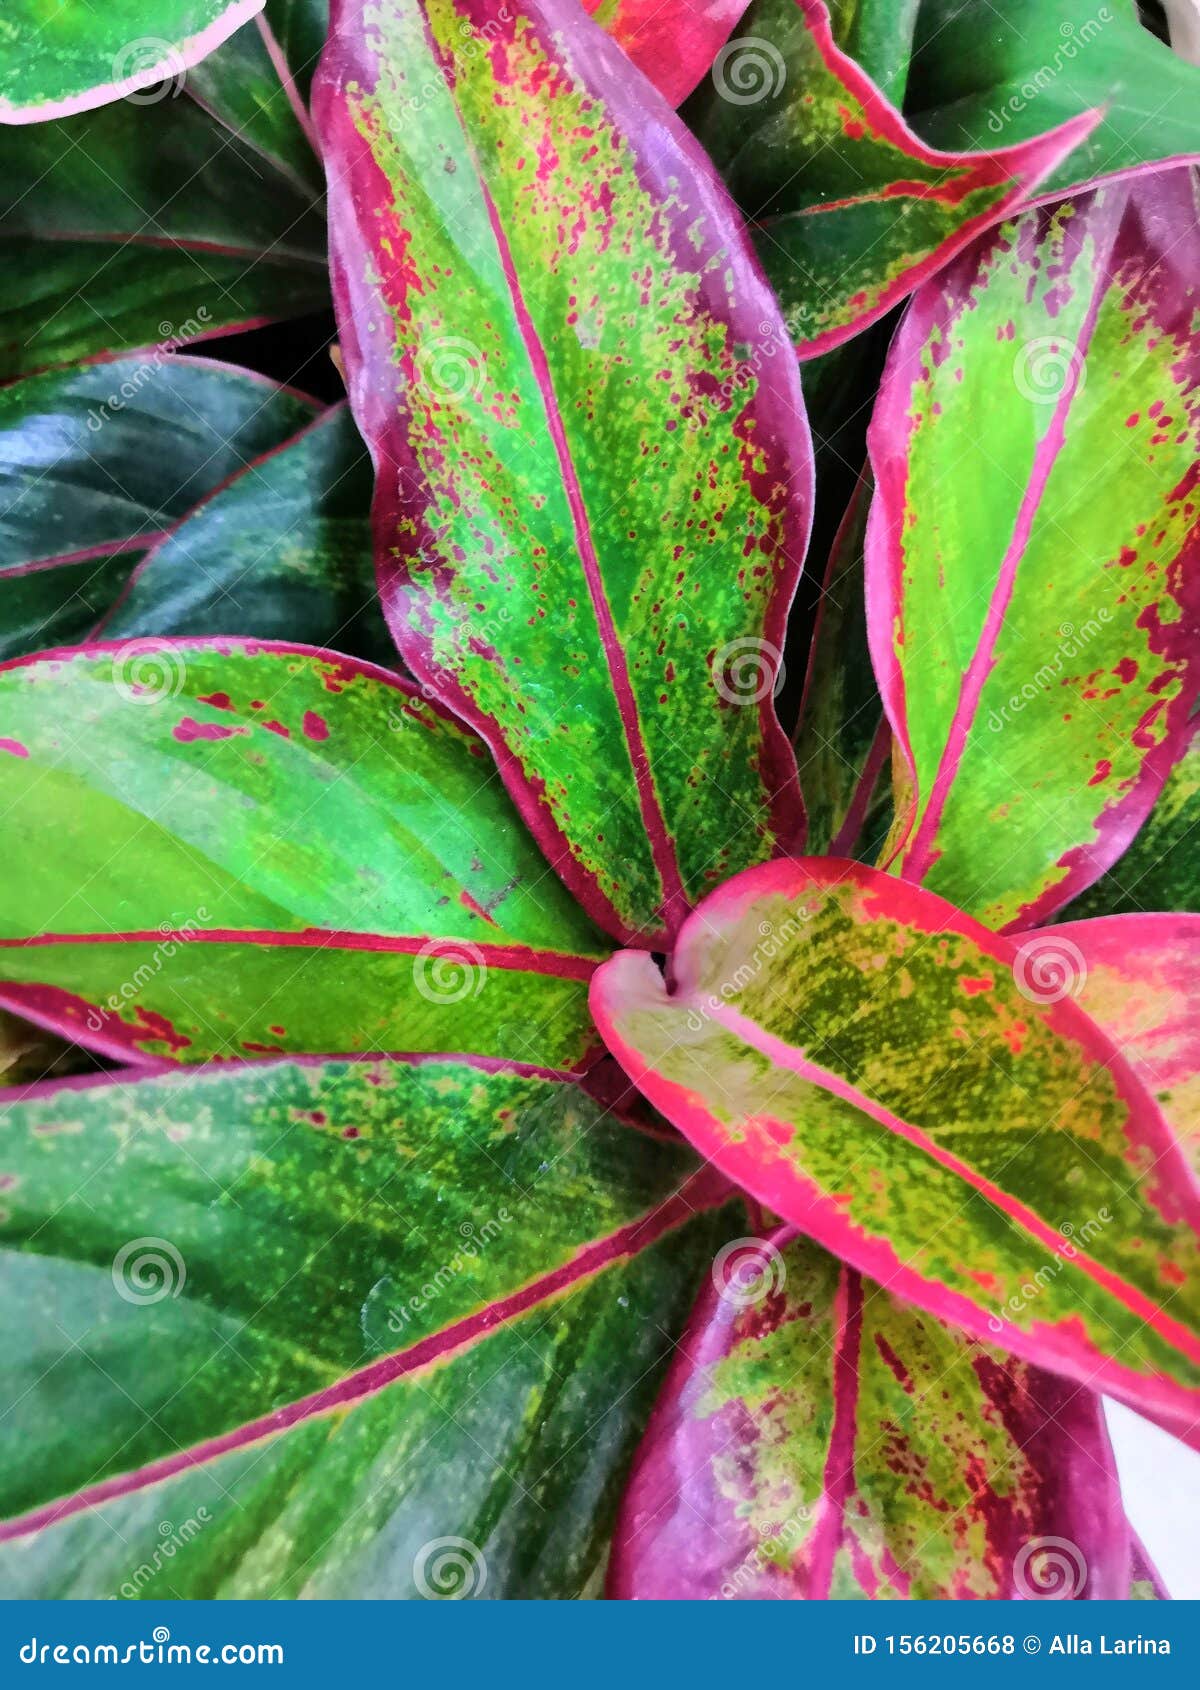 Striped Colorful Bright Beautiful Leaves Calathea Tropical Plants